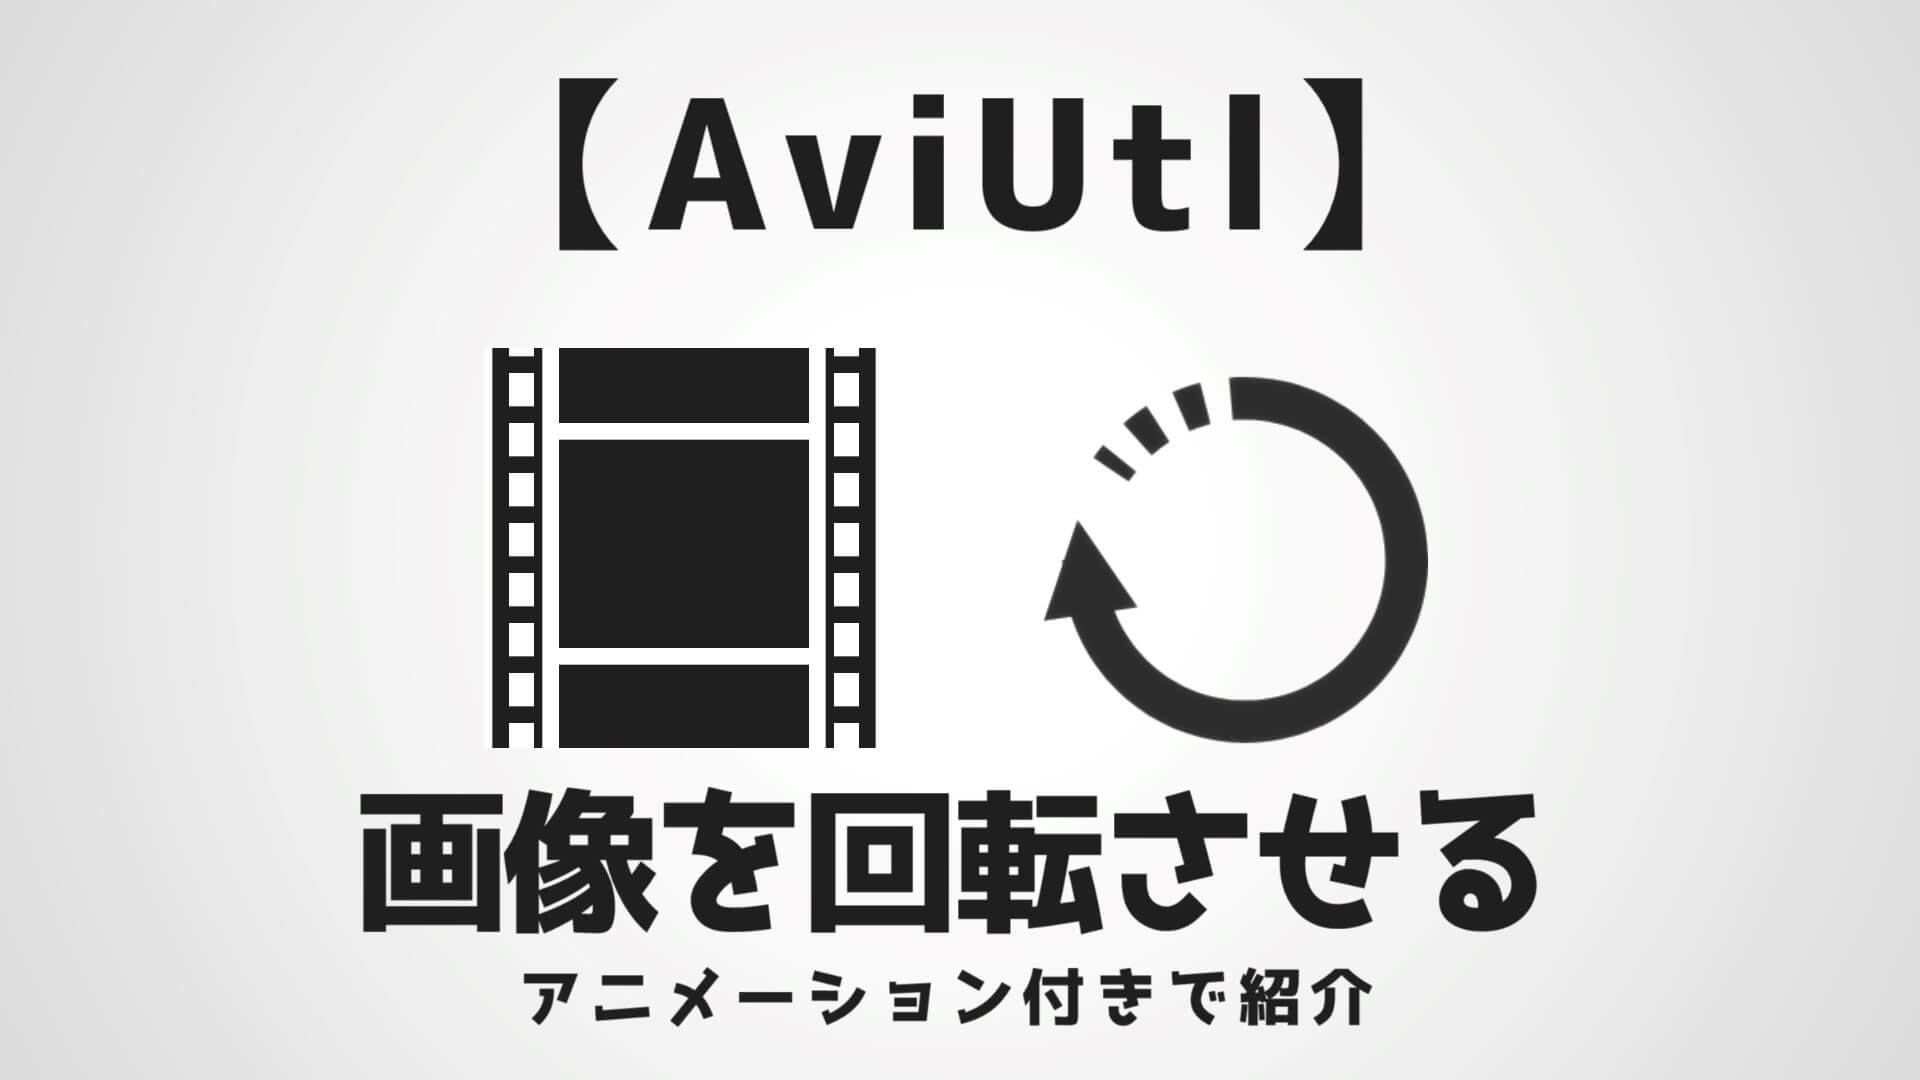 Aviutl 画像を回転させる方法 アニメーション付きでわかりやすく解説 Aketama Official Blog